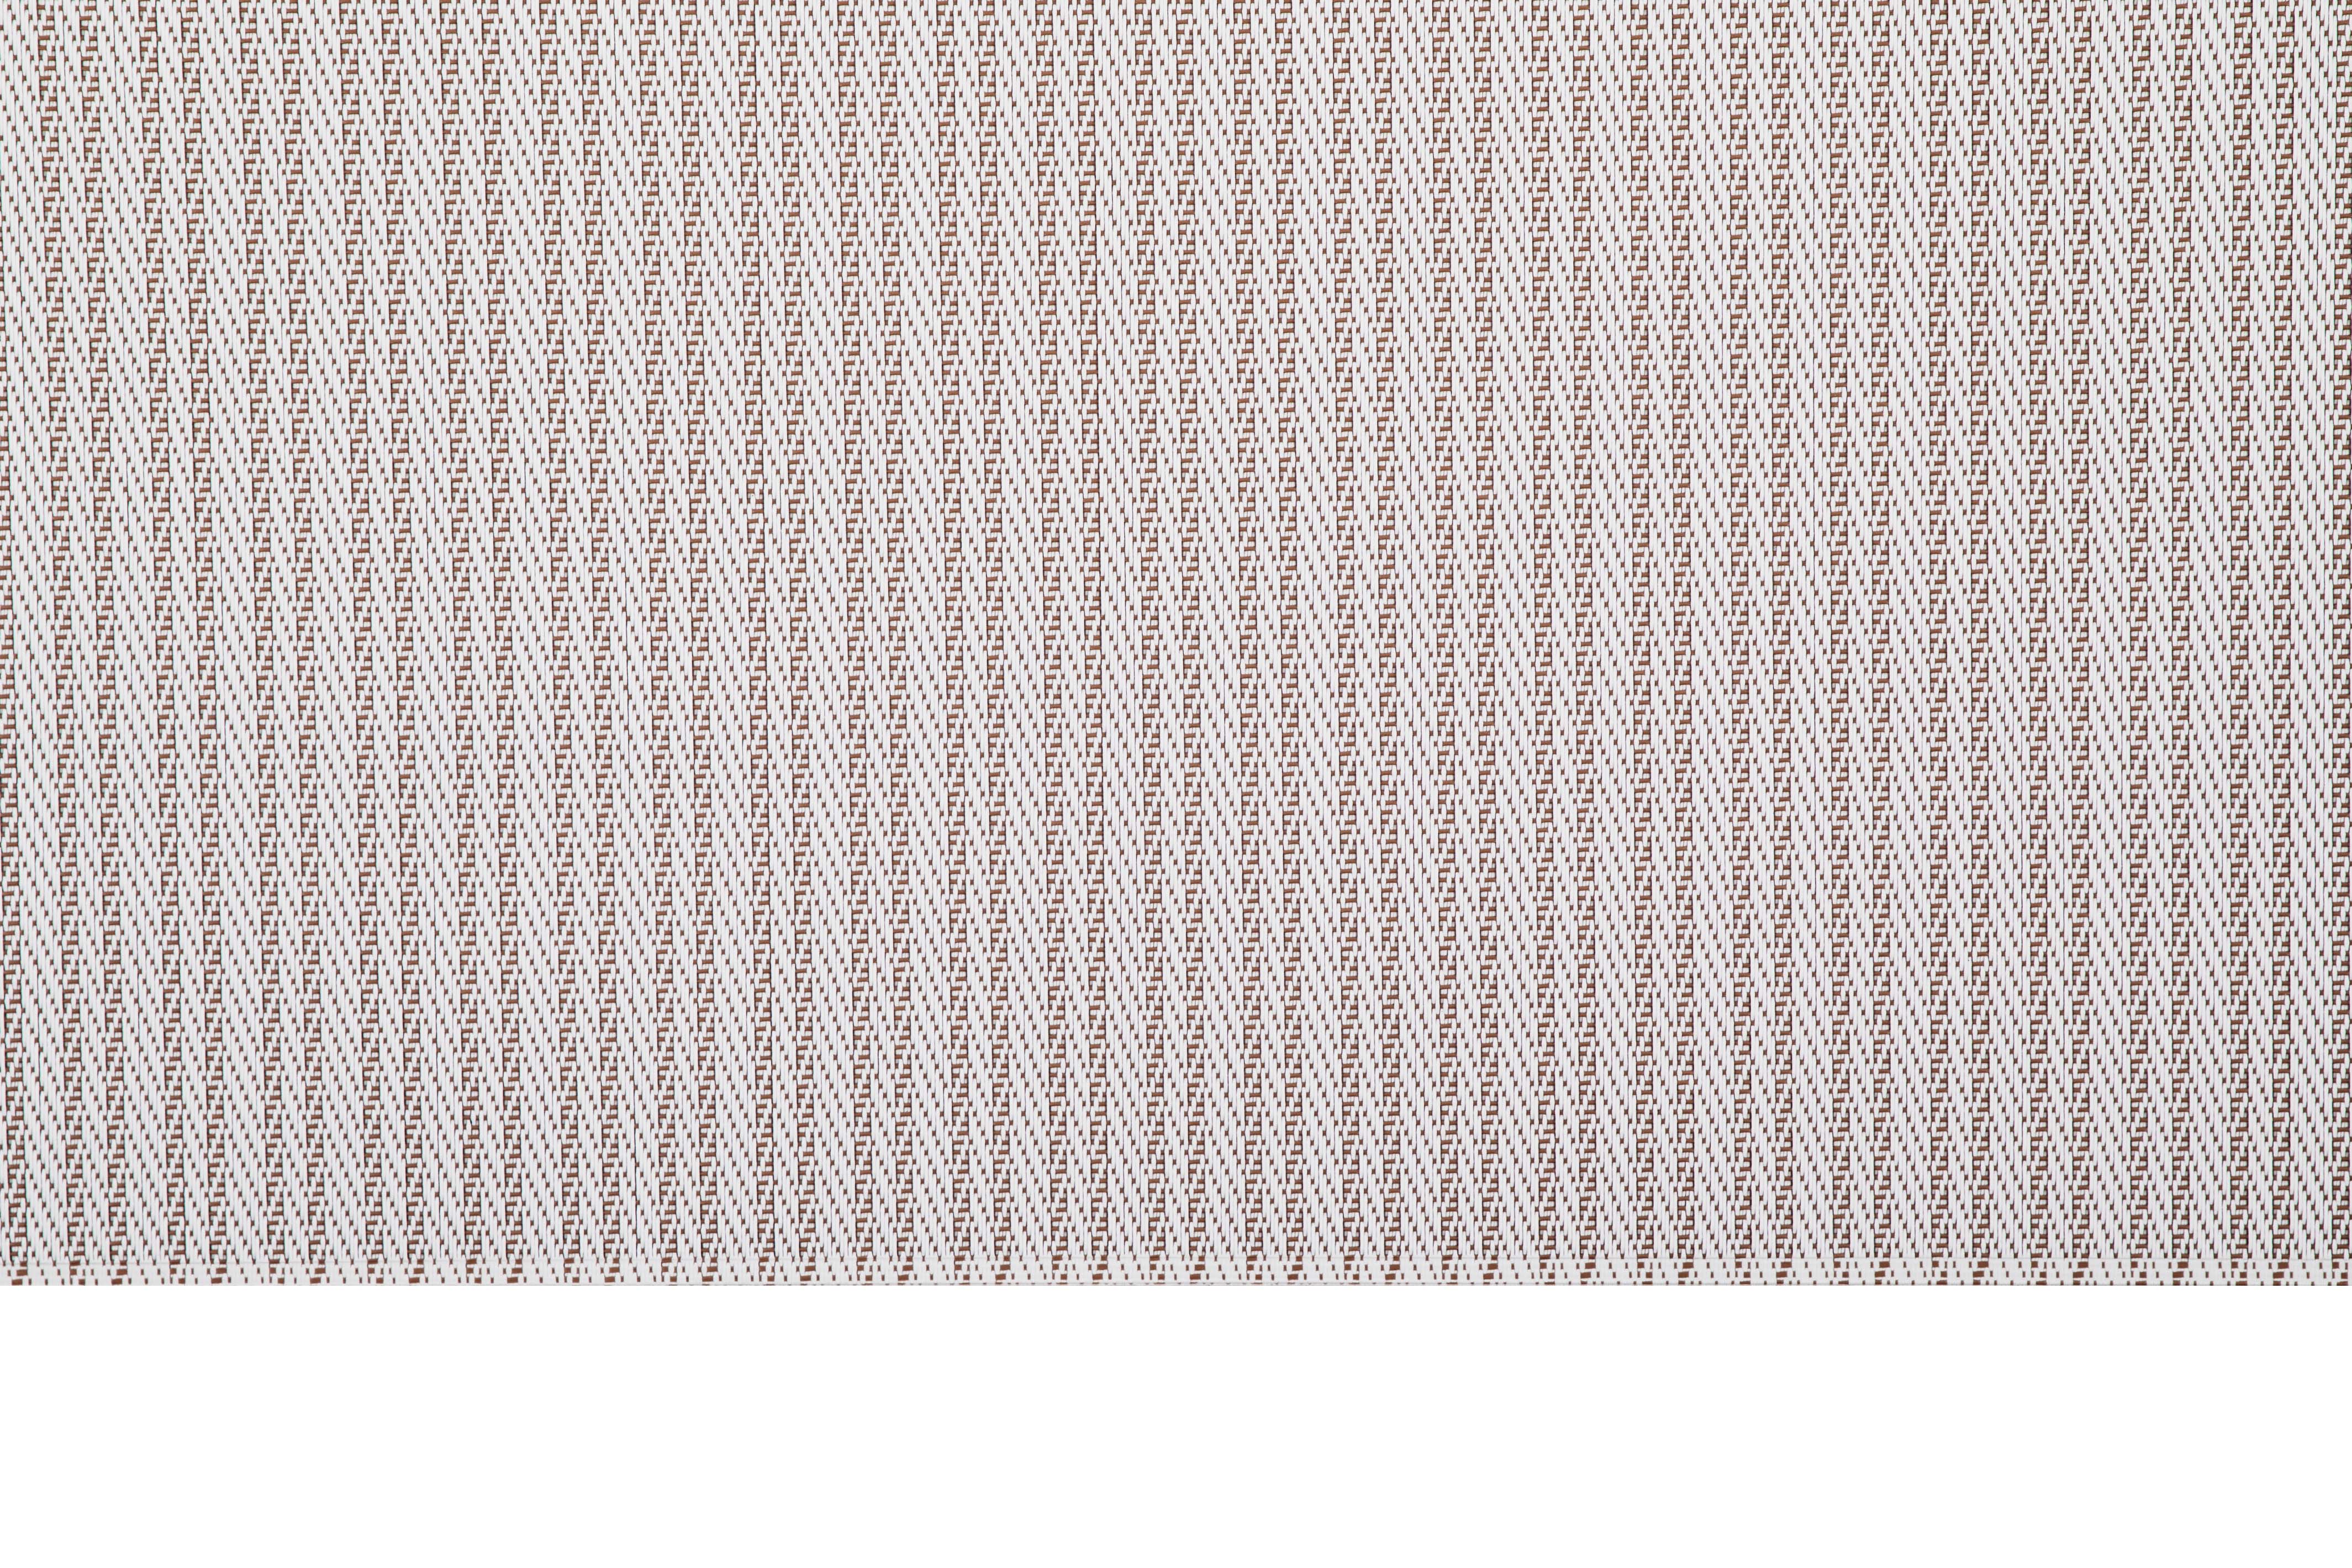 Placemat FALLON rectangular, 33x45cm, double stripe dark taupe